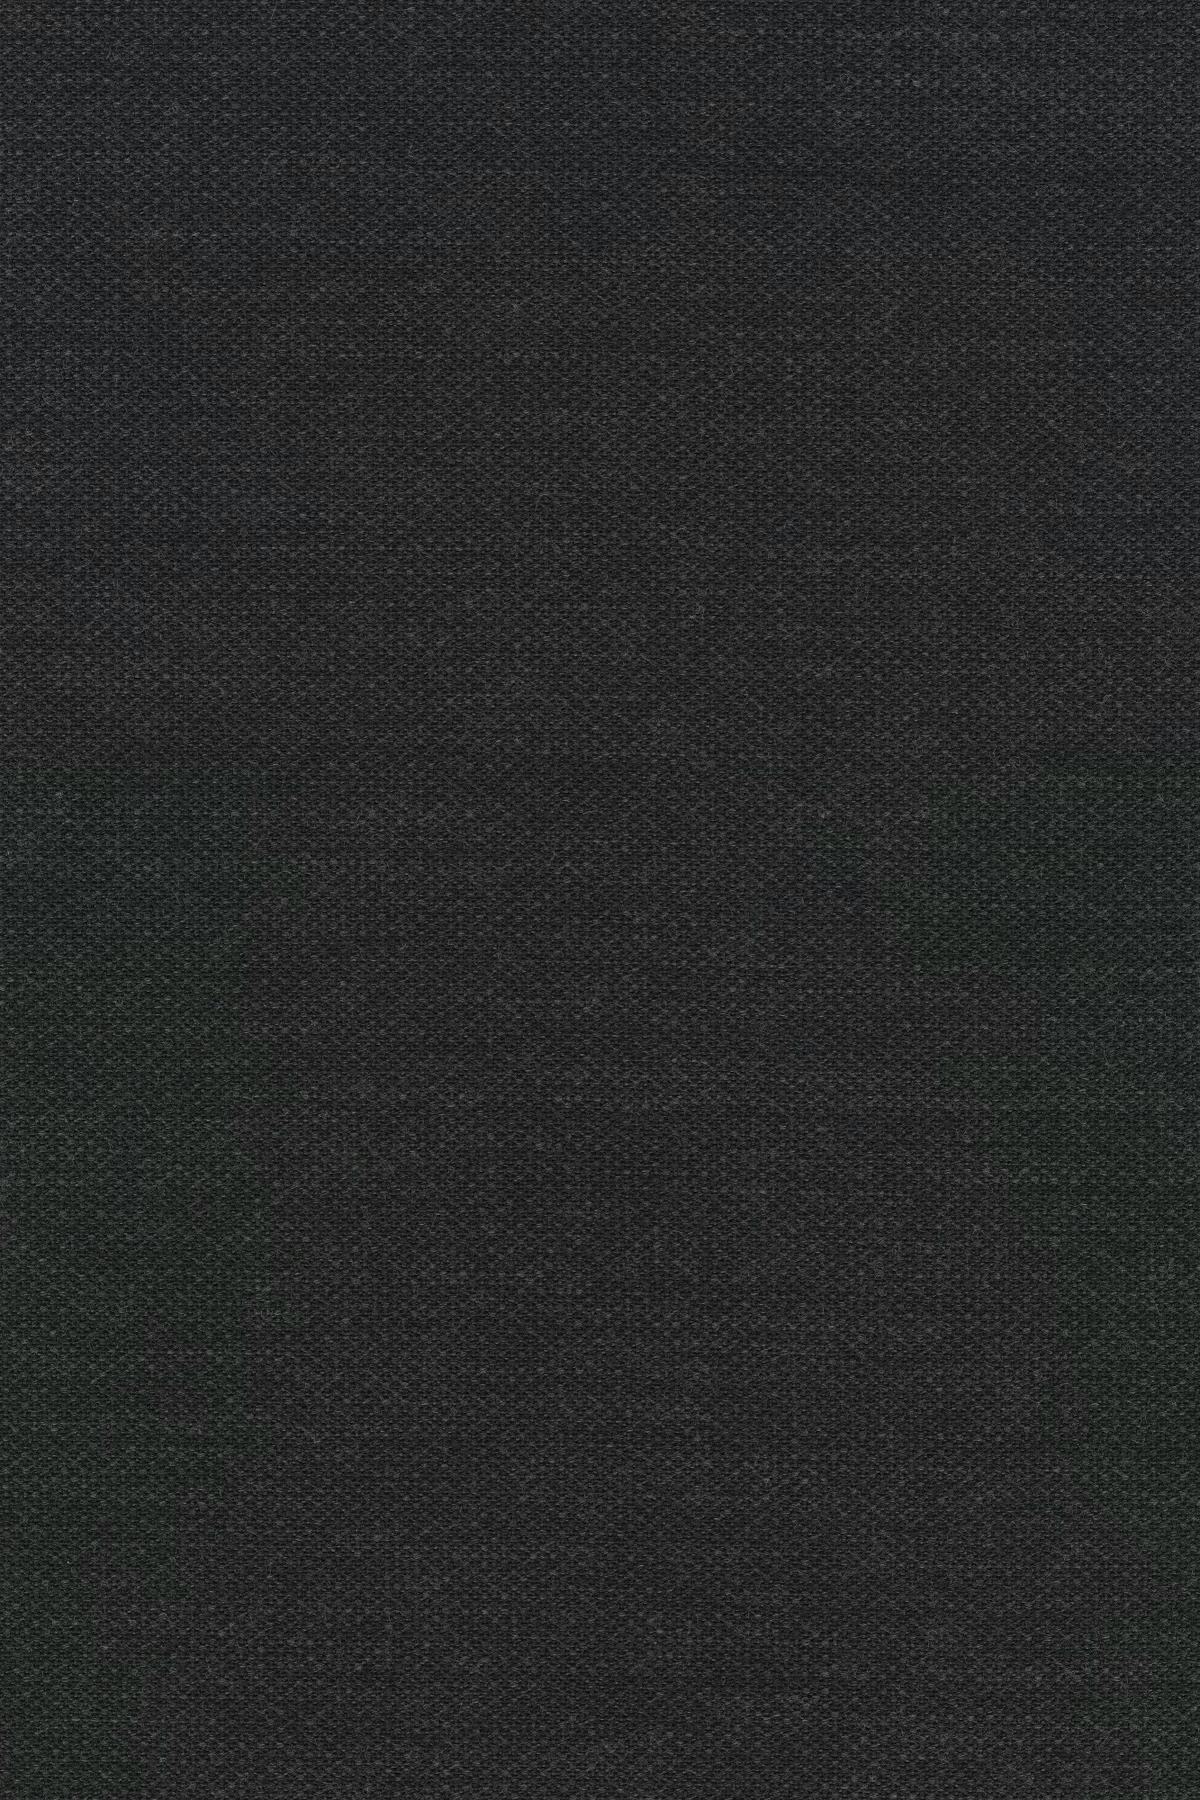 Fabric sample Fiord 191 grey